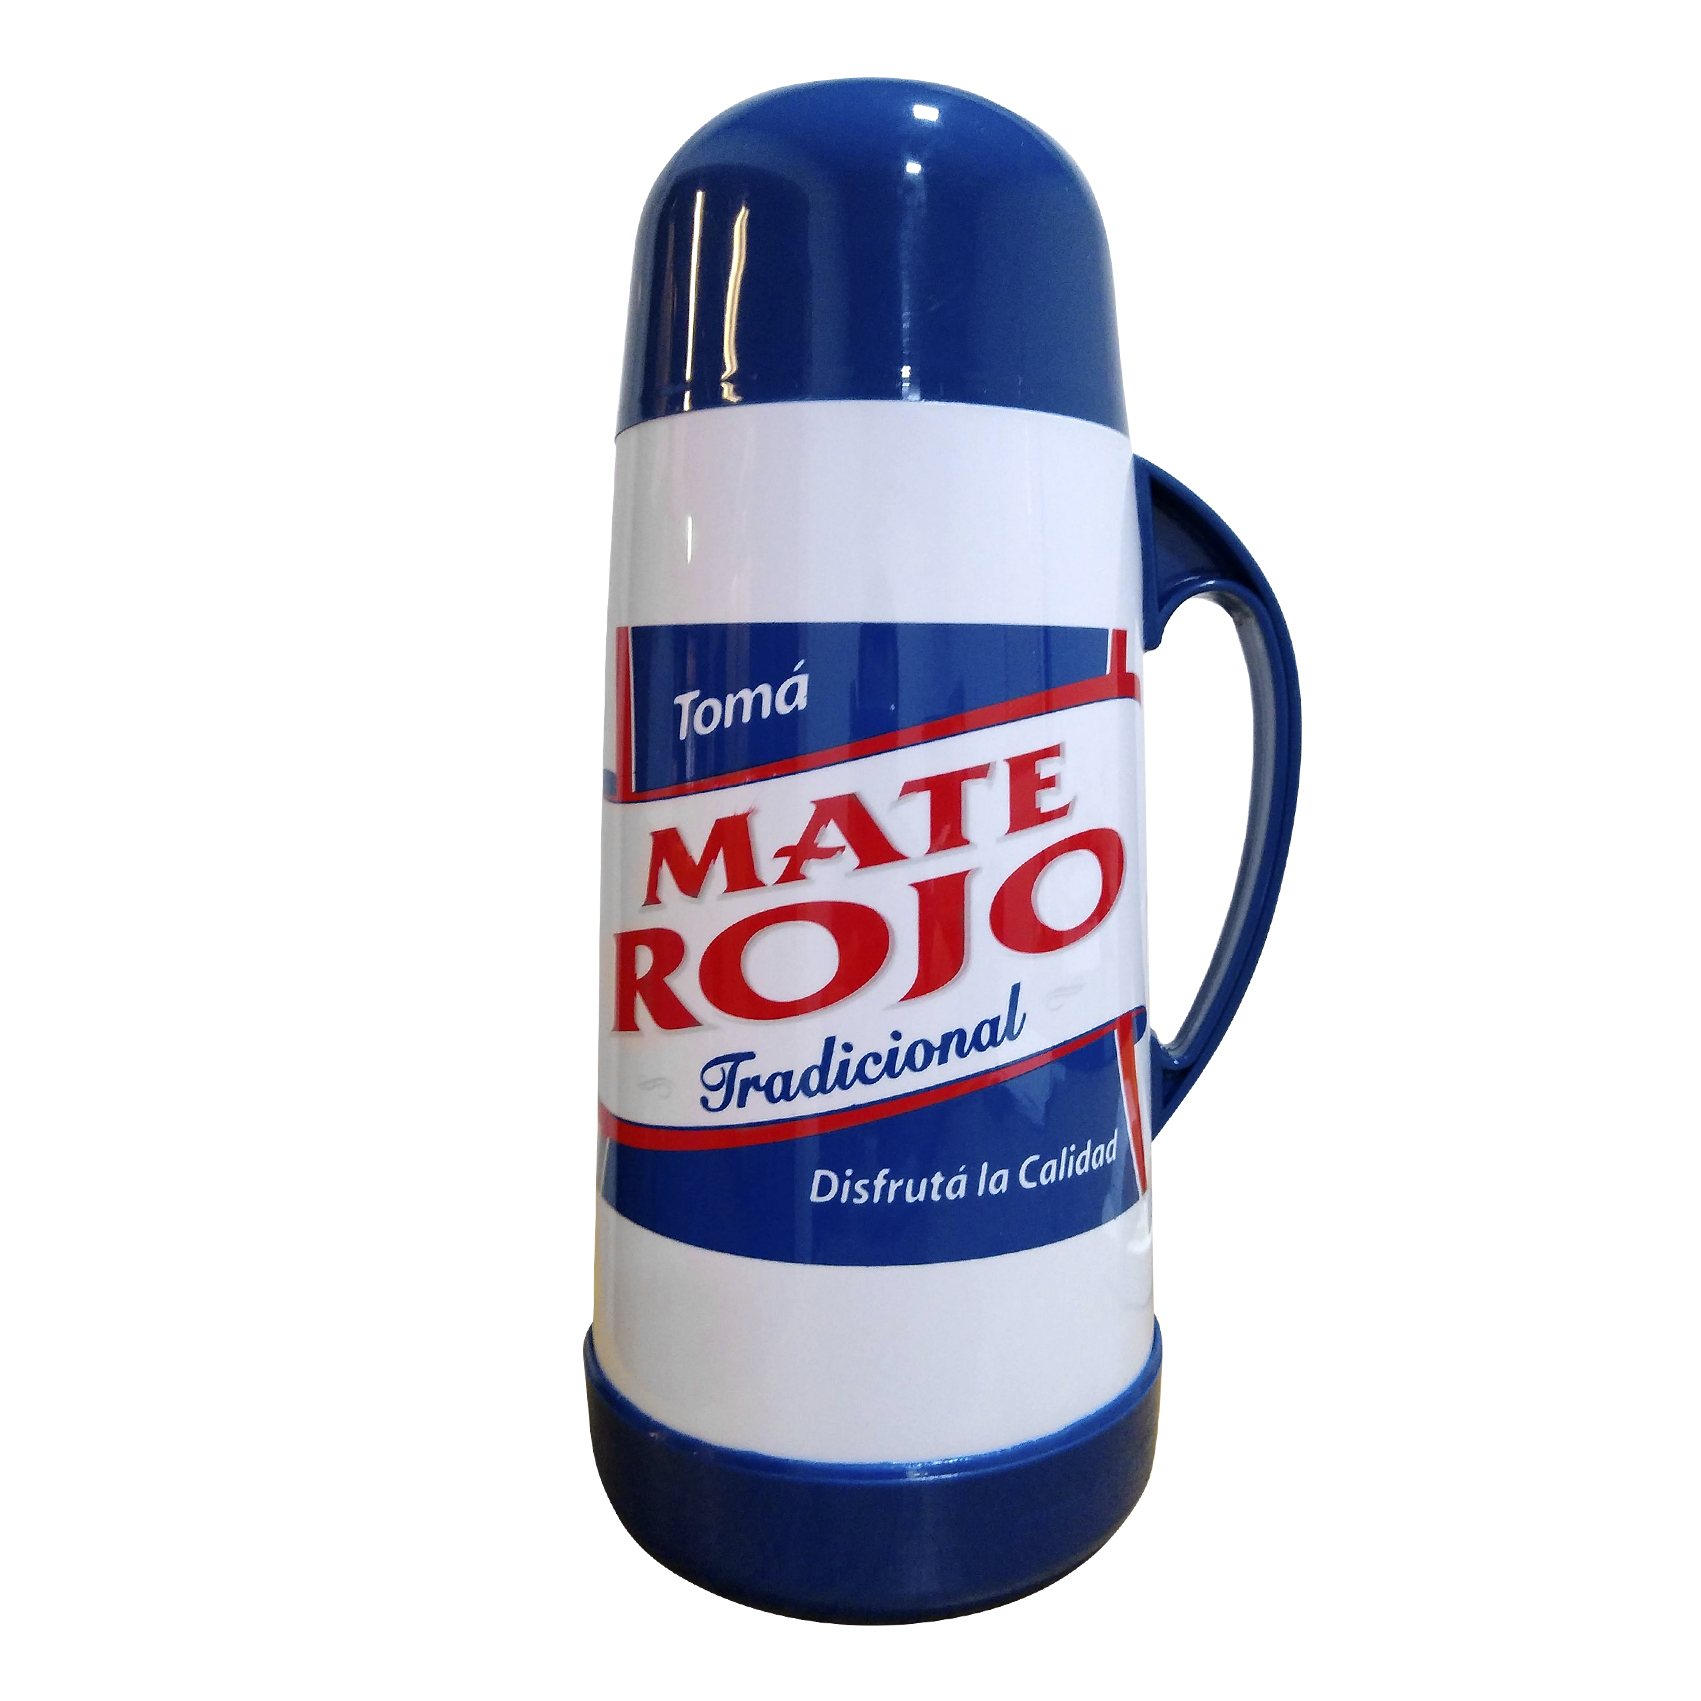 https://grupomaterojo.com.ar/wp-content/uploads/Productos-Grupo-Mate-Rojo-Termo-Mate-Rojo-01.jpg